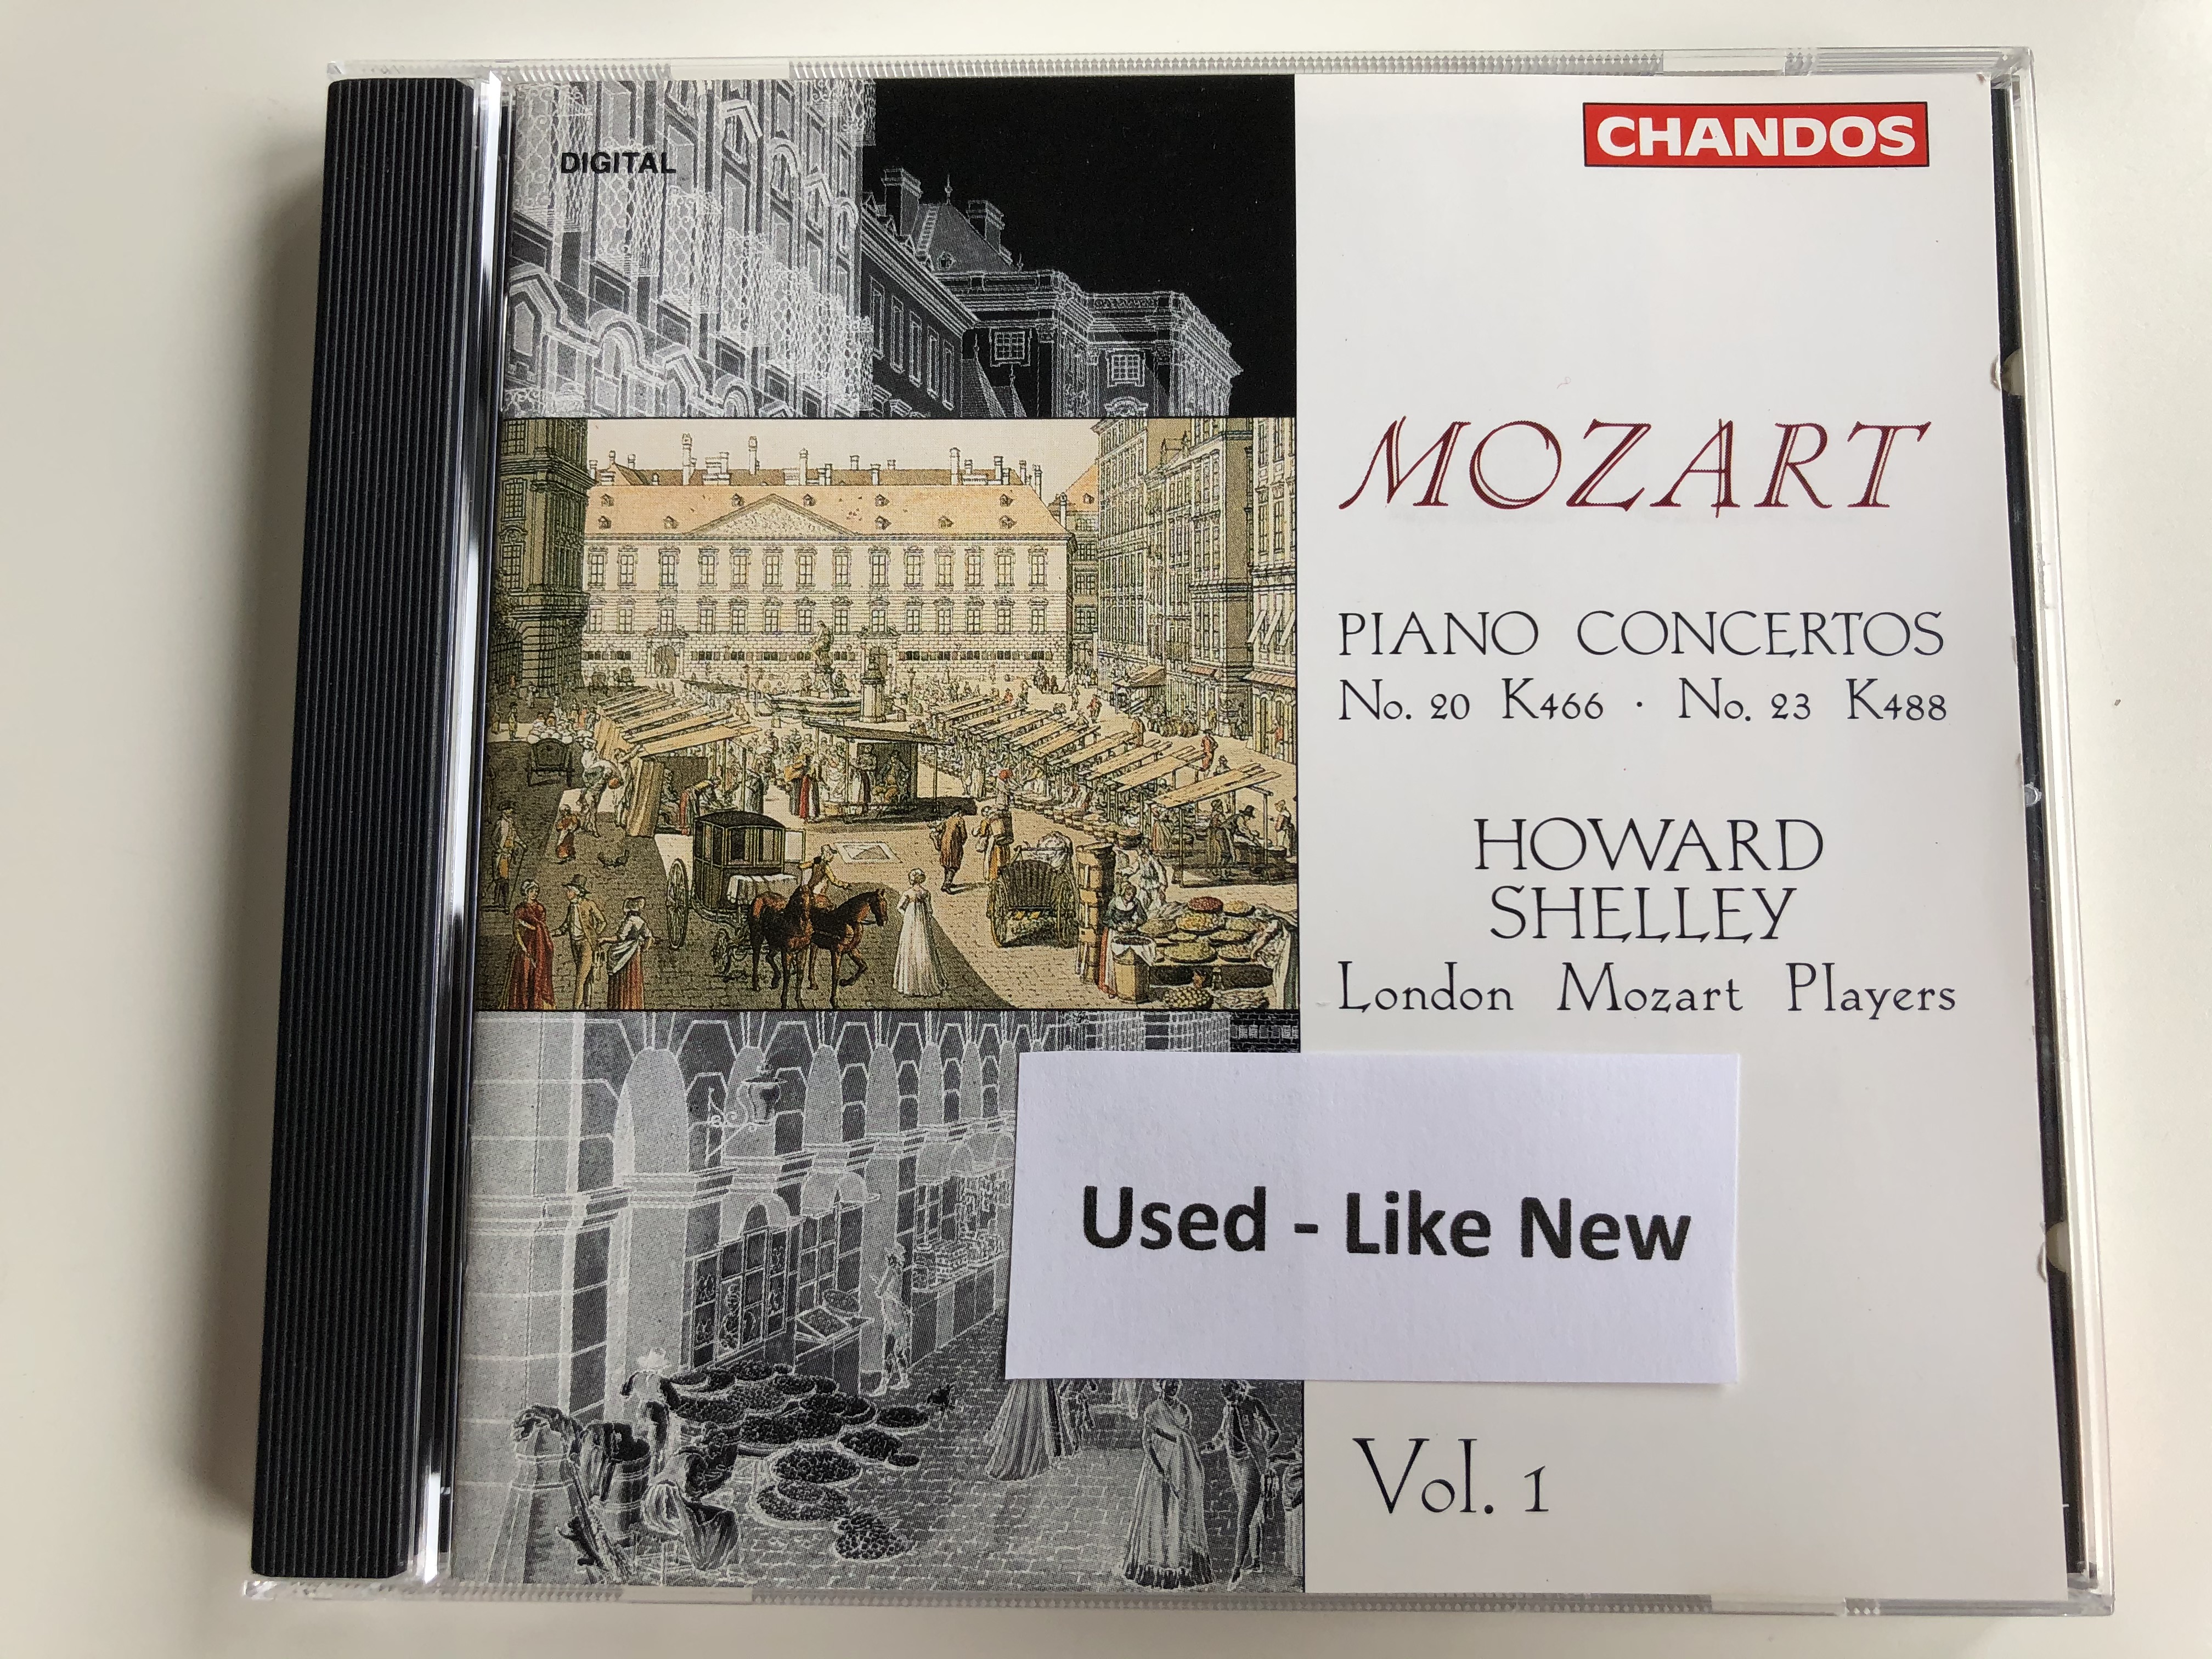 mozart-piano-concertos-no.-20-k466-no.-23-k488-howard-shelley-london-mozart-players-vol.-1-chandos-records-audio-cd-1991-chan-8992-1-.jpg